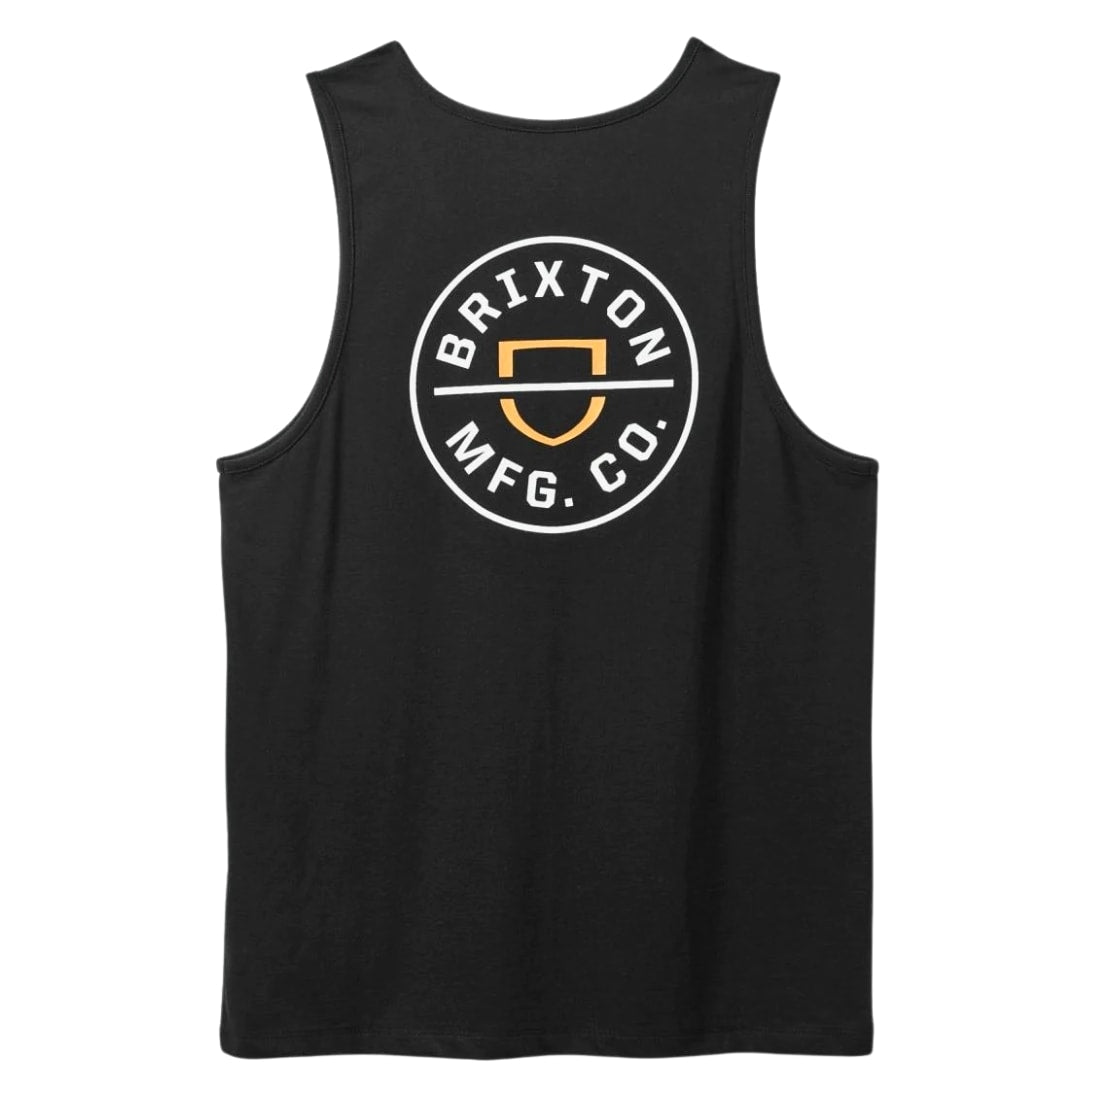 Brixton Crest Tank Top Vest - Black/Apricot Crush/White - Mens Skate Brand Vest/Tank Top by Brixton